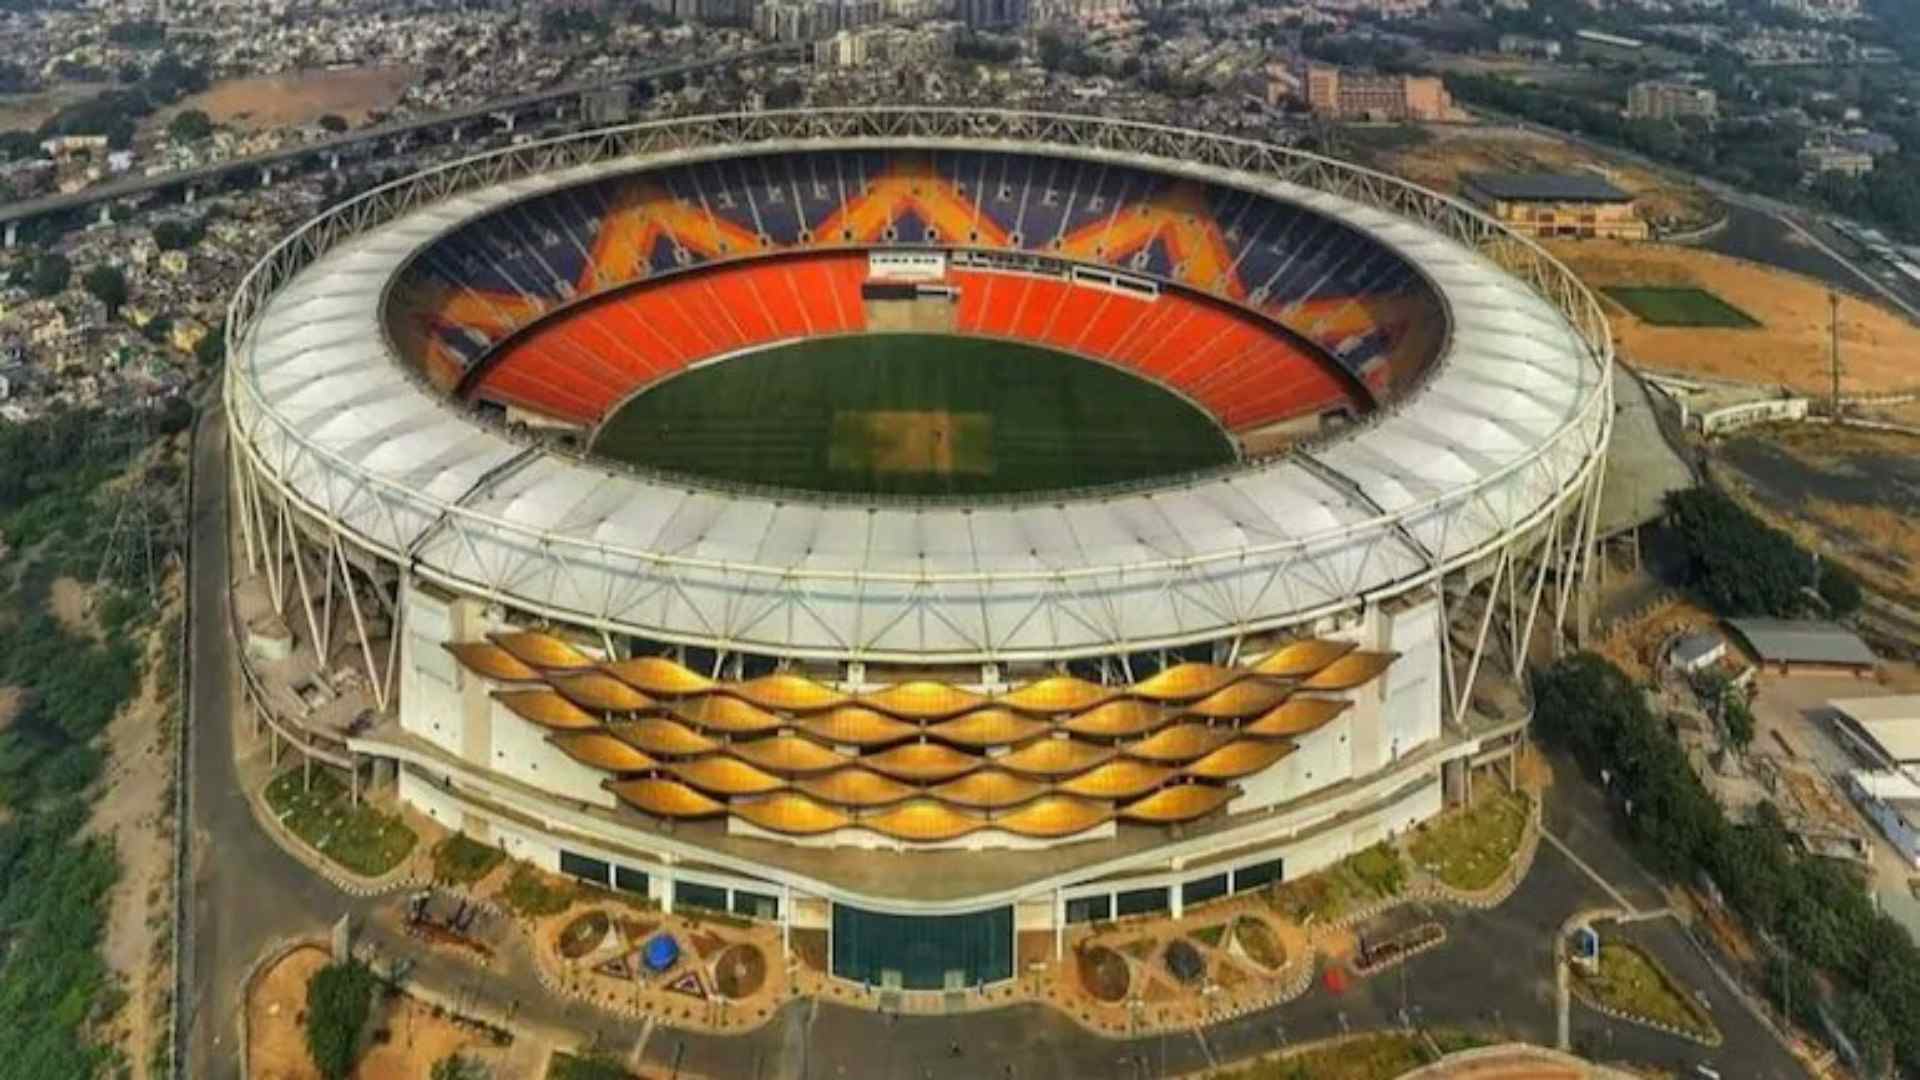 Motera stadium in a file photo. (Image credit: Twitter)